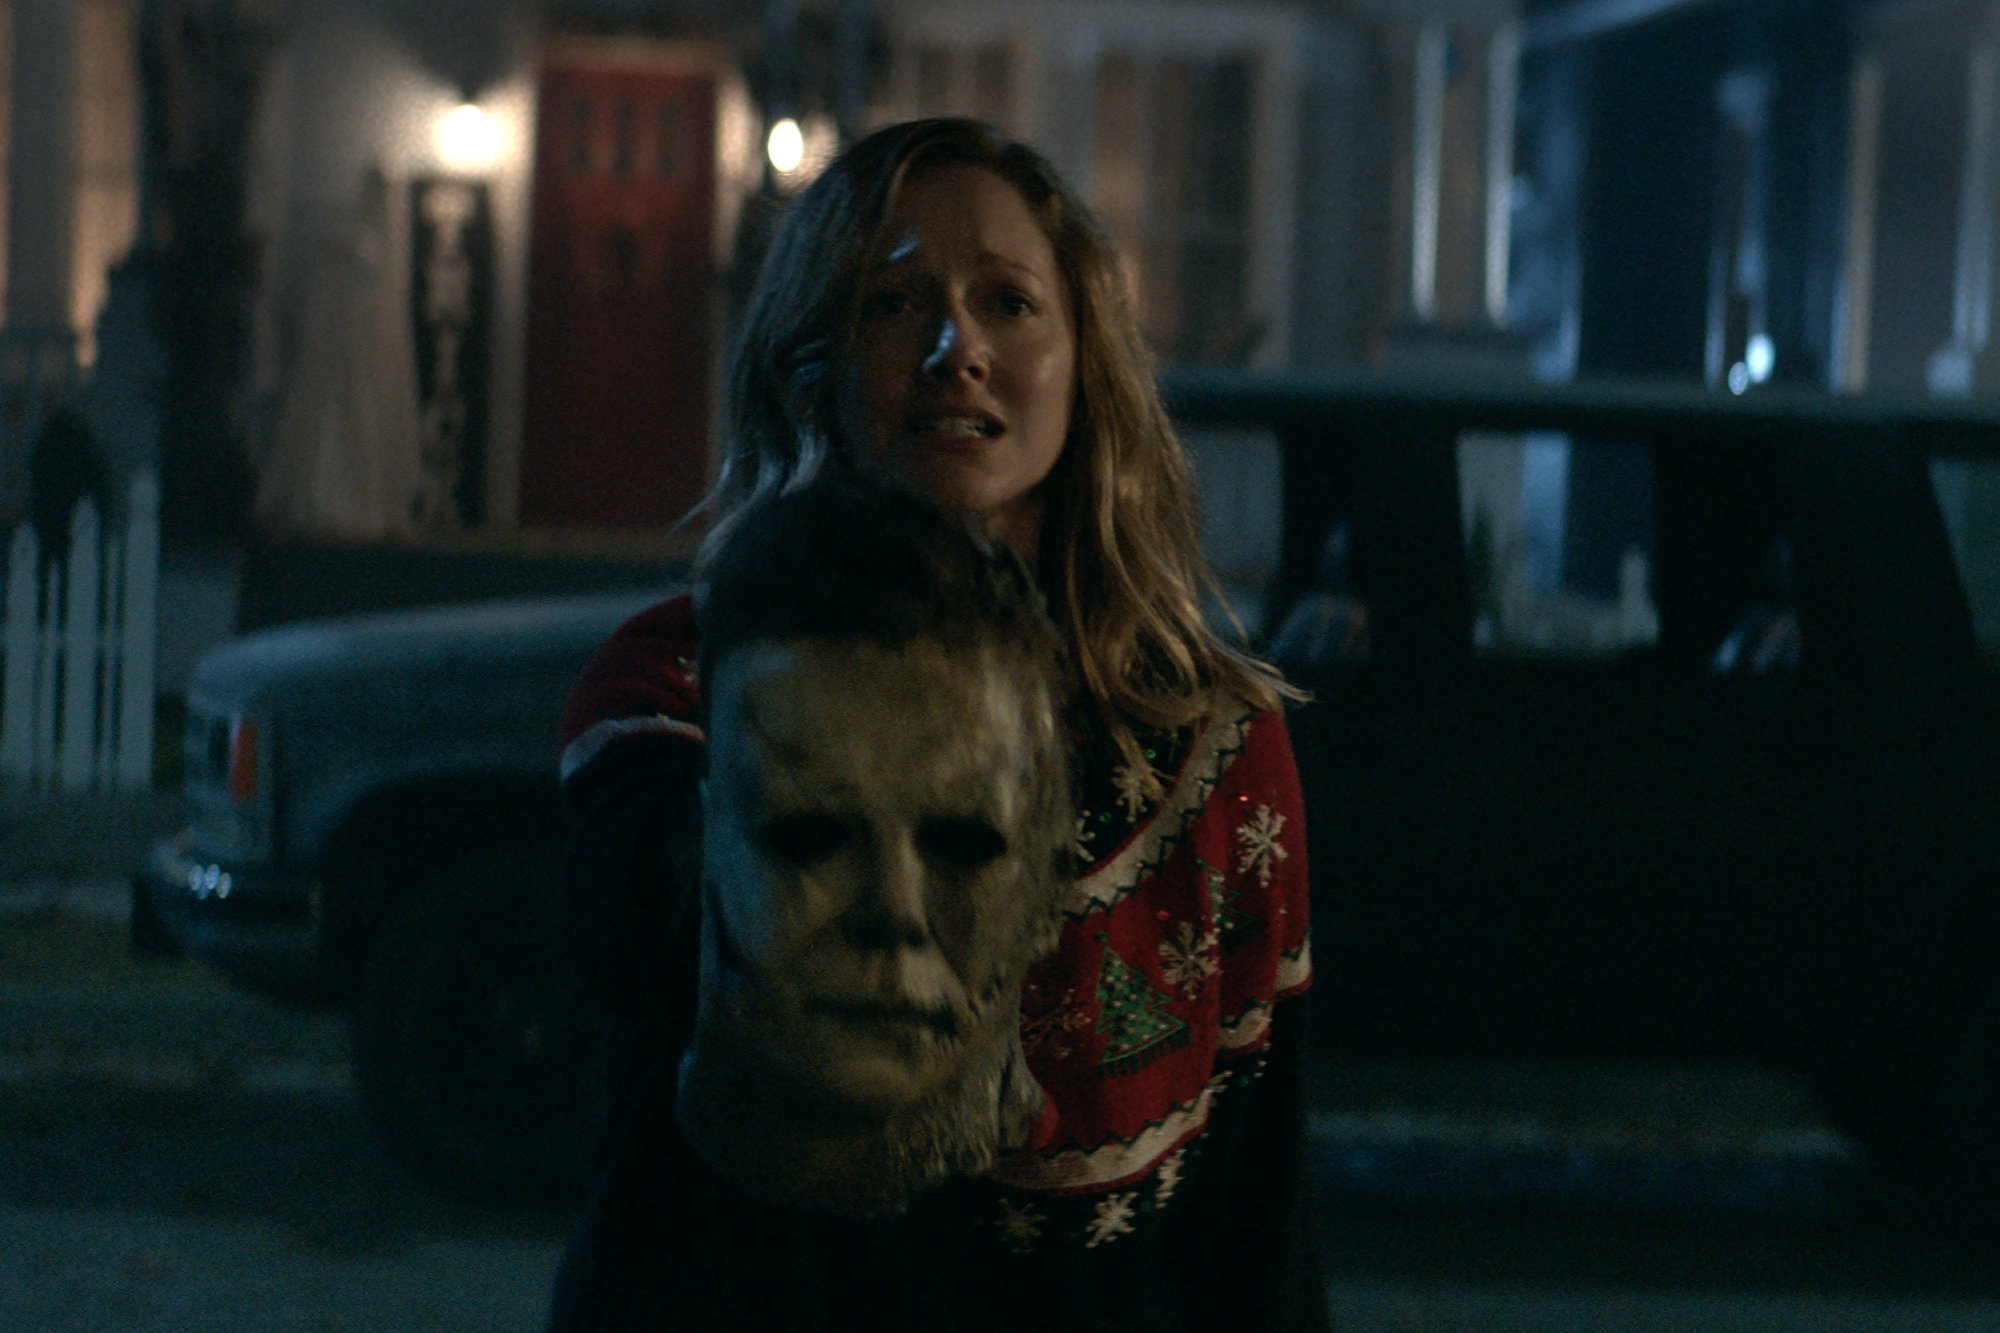 'Halloween Kills' actor Judy Greer as Karen holding Michael Myers' mask